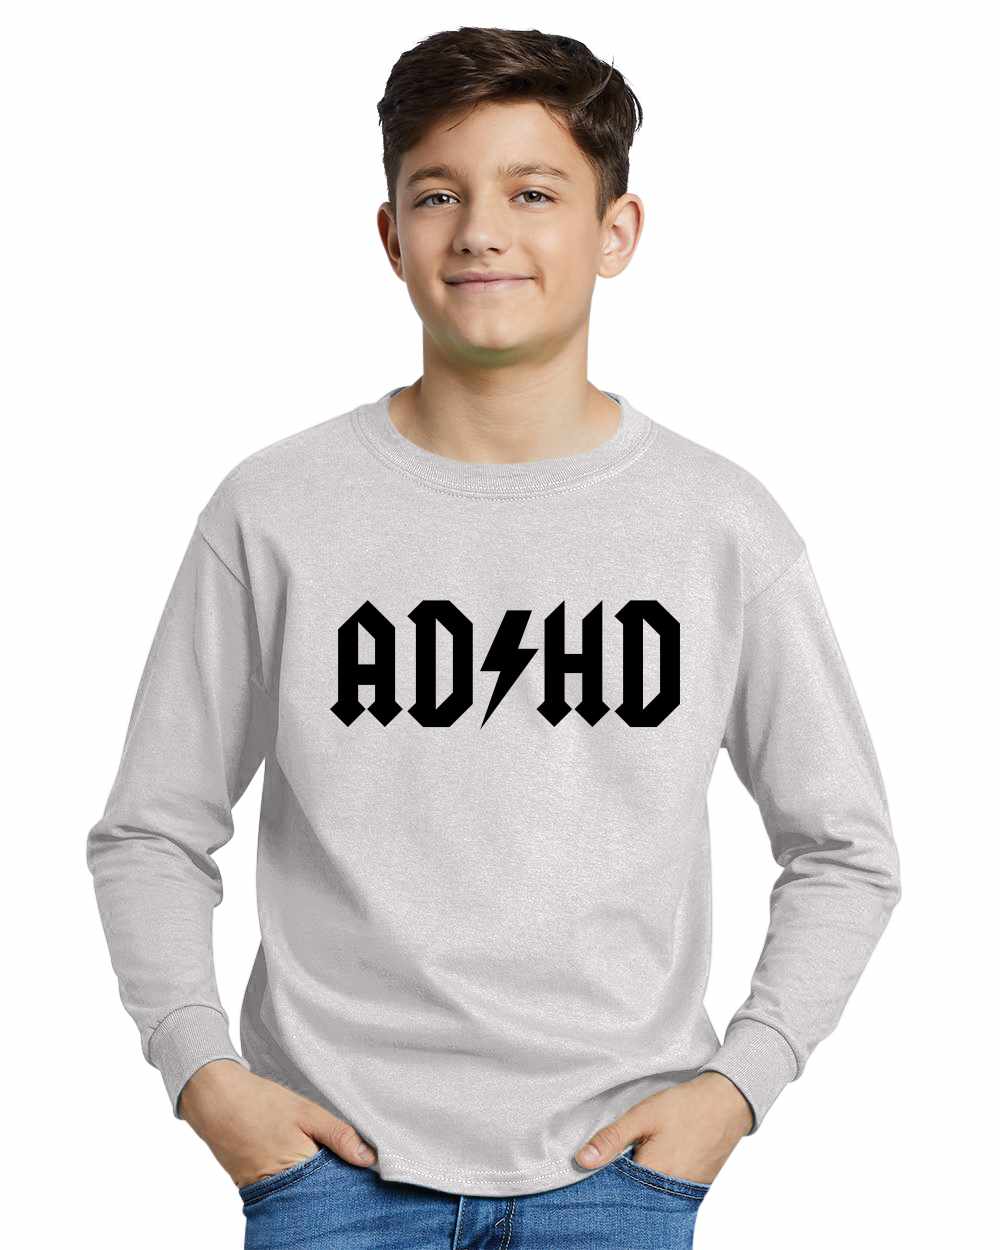 ADHD on Youth Long Sleeve Shirt (#828-203)